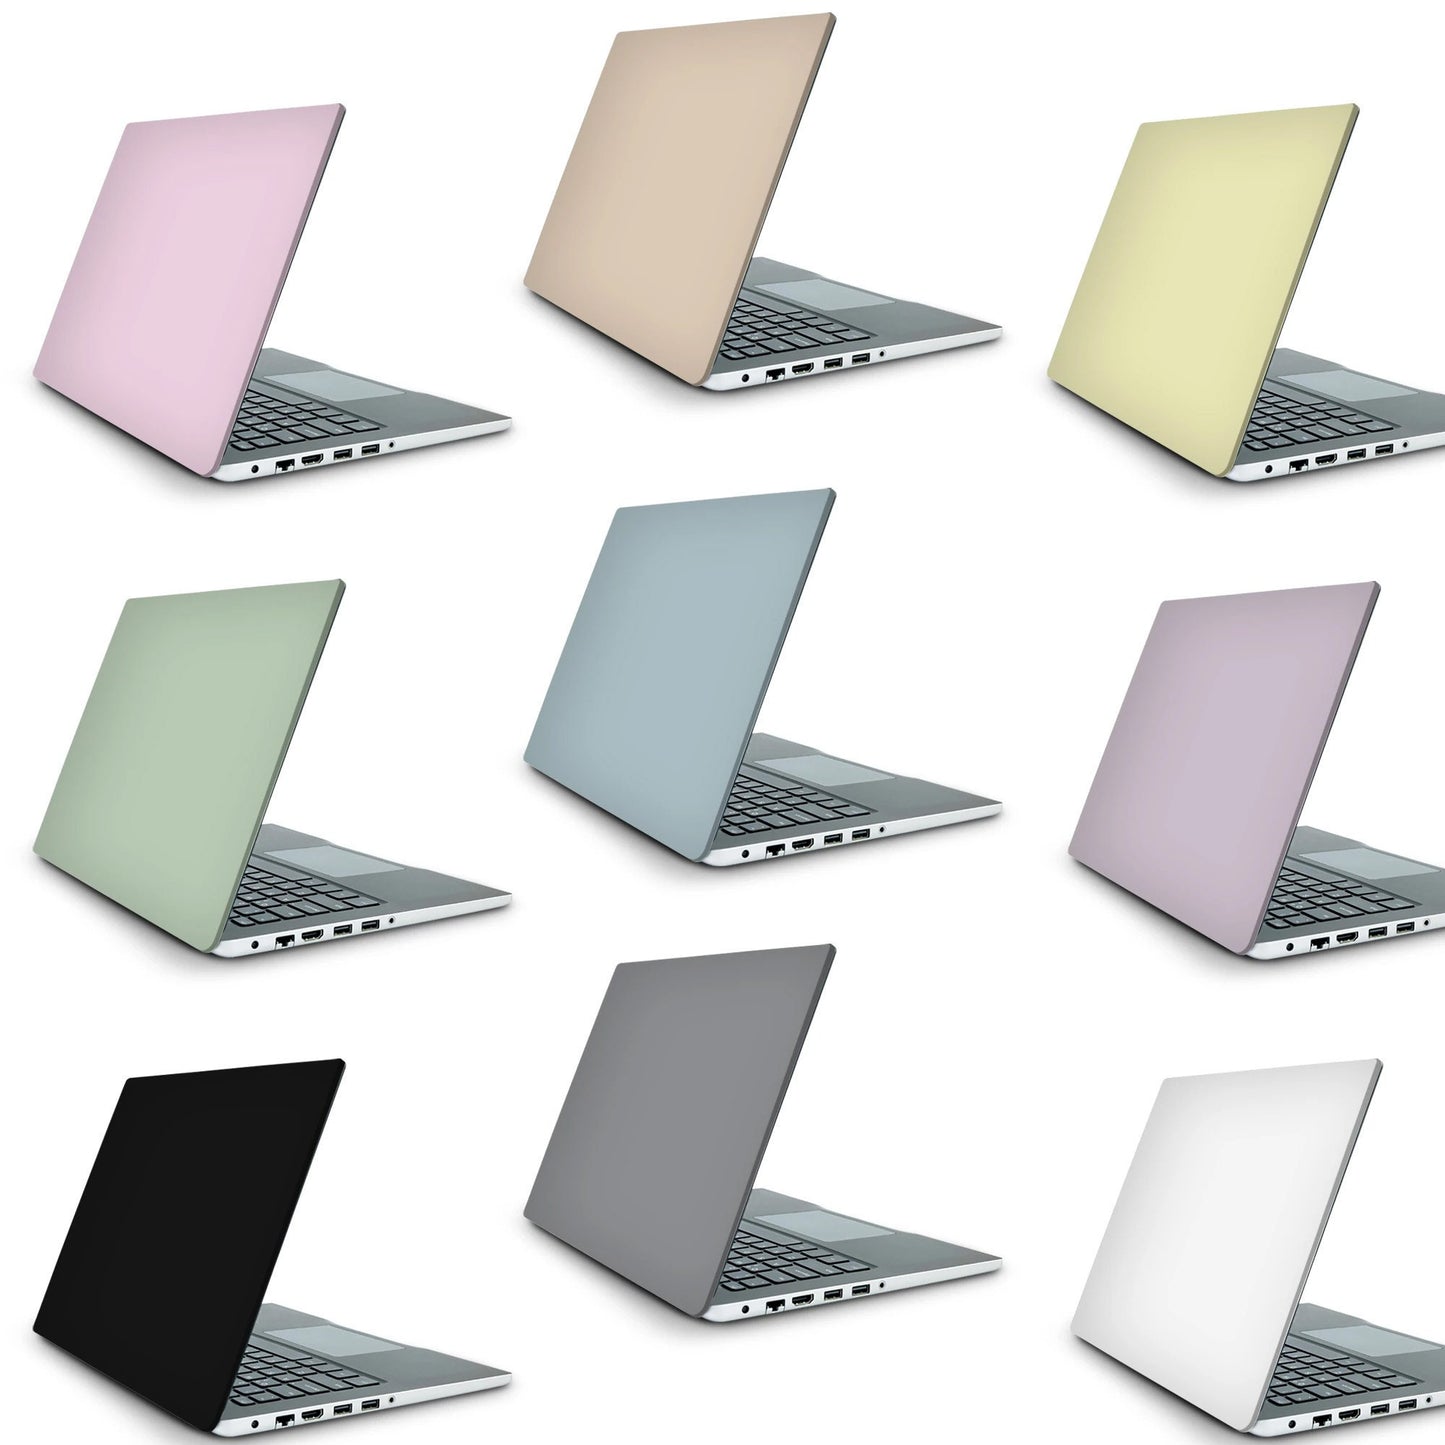 Floral Laptop Skin, Laptop Cover, Laptop Skins, Removable Laptop Skins, Laptop Decal, Customized Laptop Skin, Laptop Stickers 346